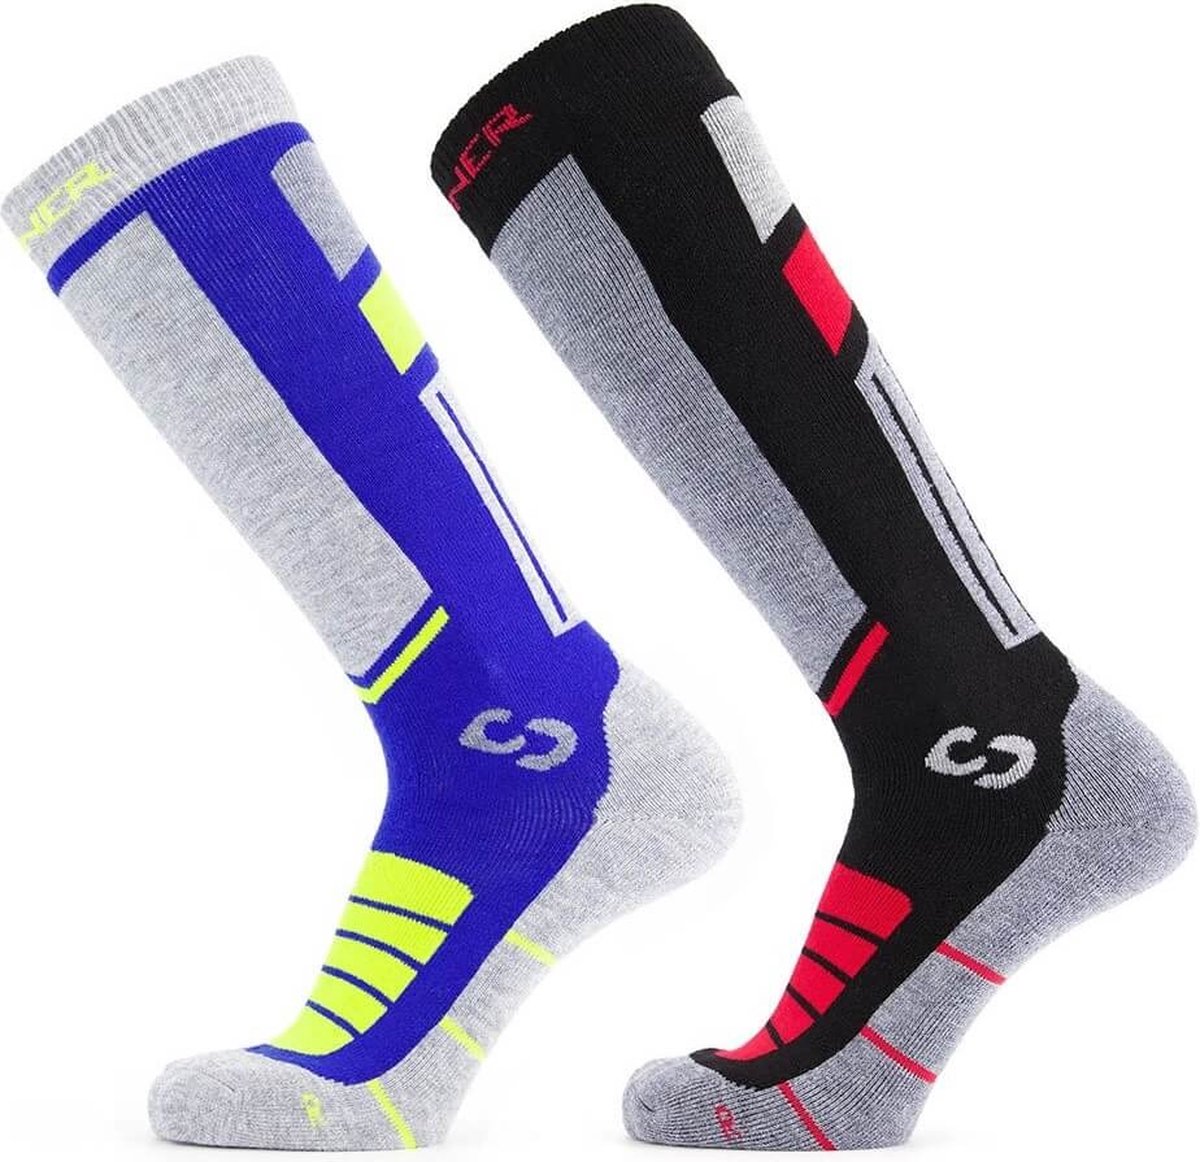 SINNER Pro Socks II Skisokken (Dubbelverpakking) - Blauw/Rood - 42-44